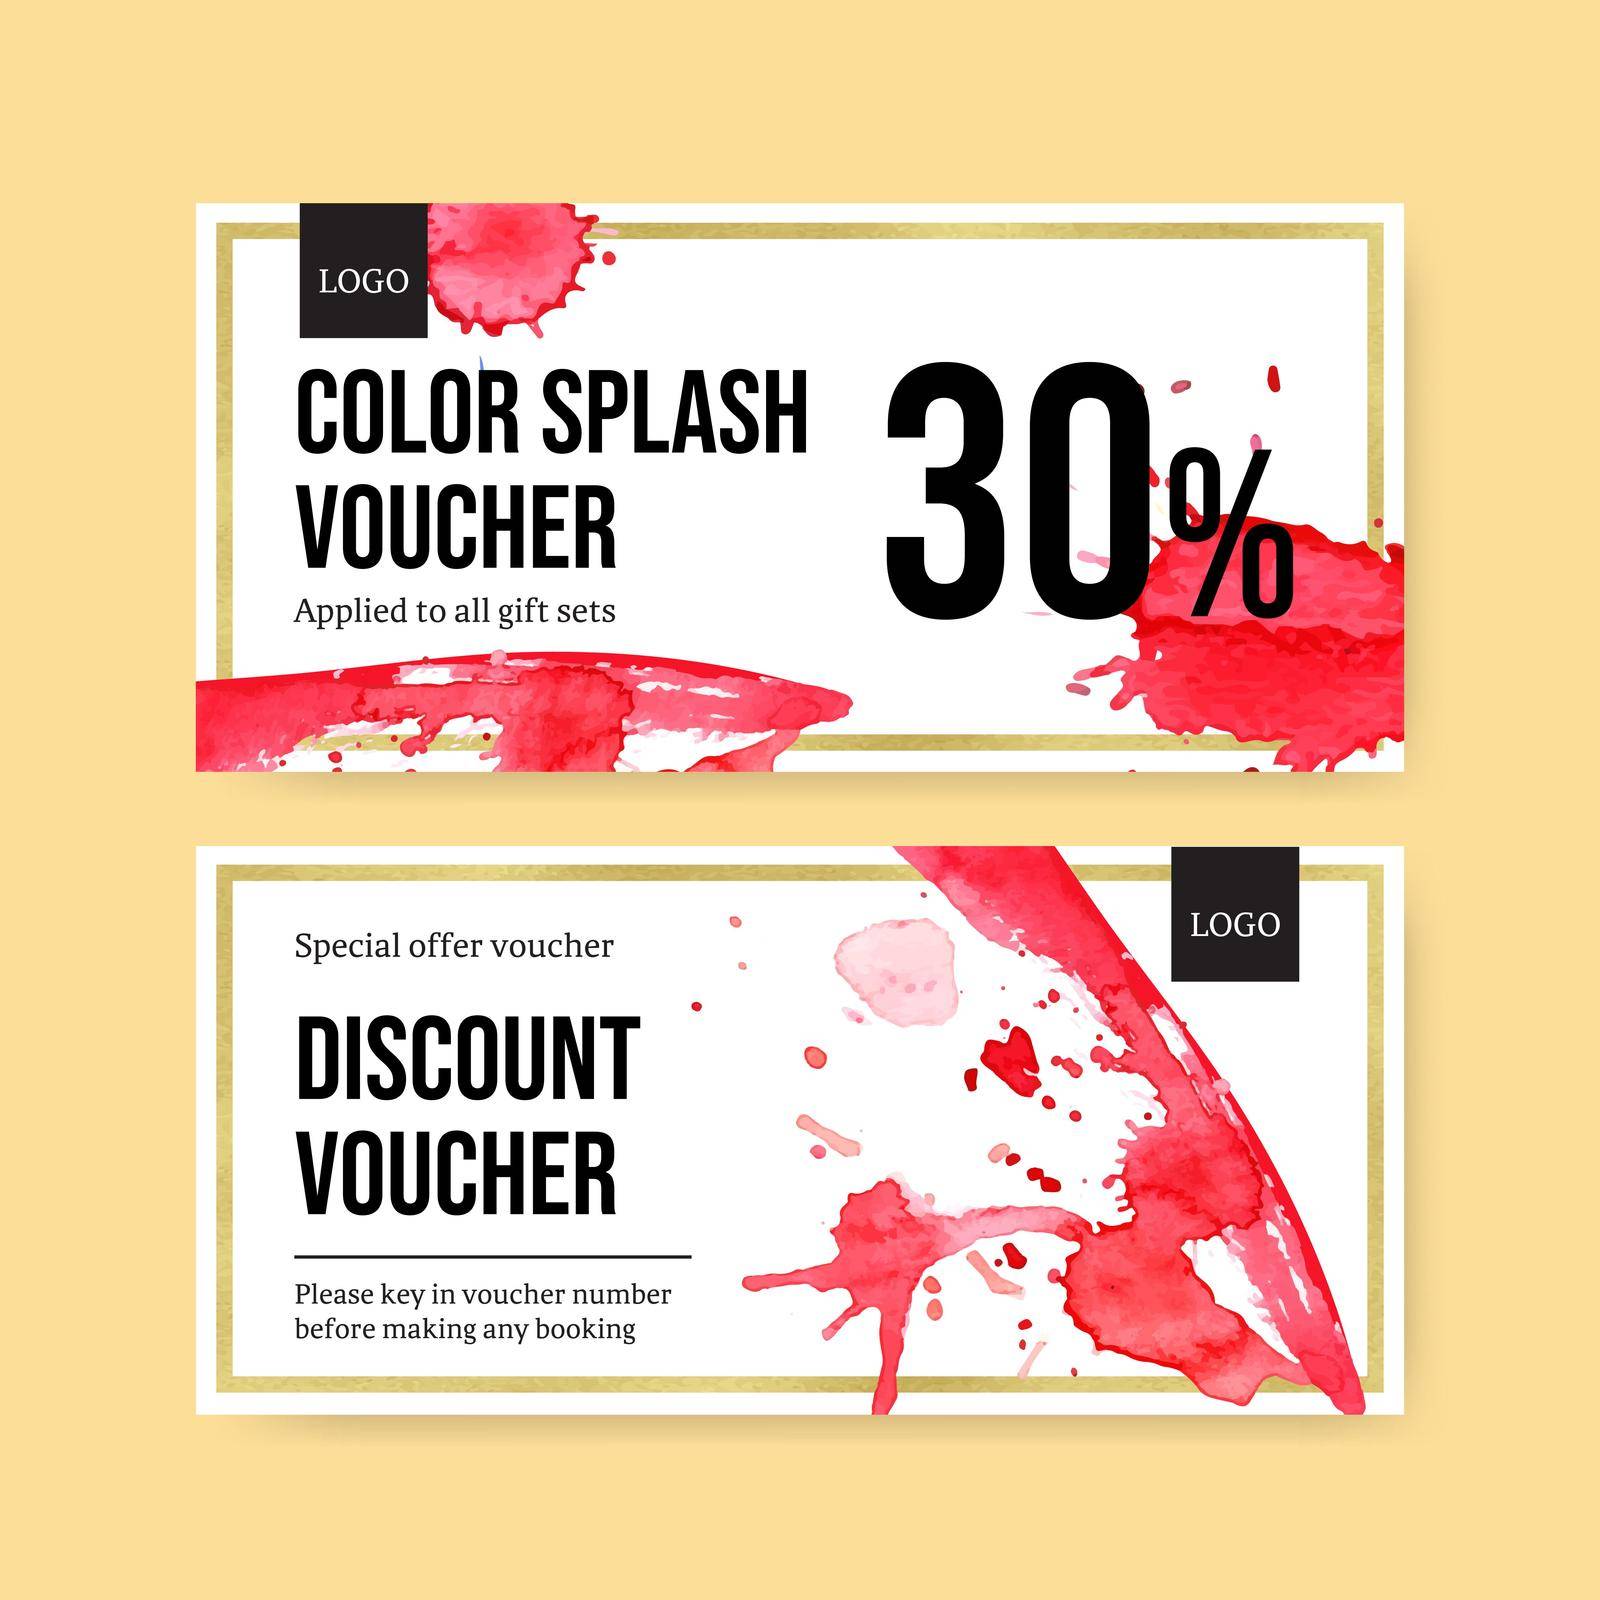 Splash color voucher design with red watercolor illustration.